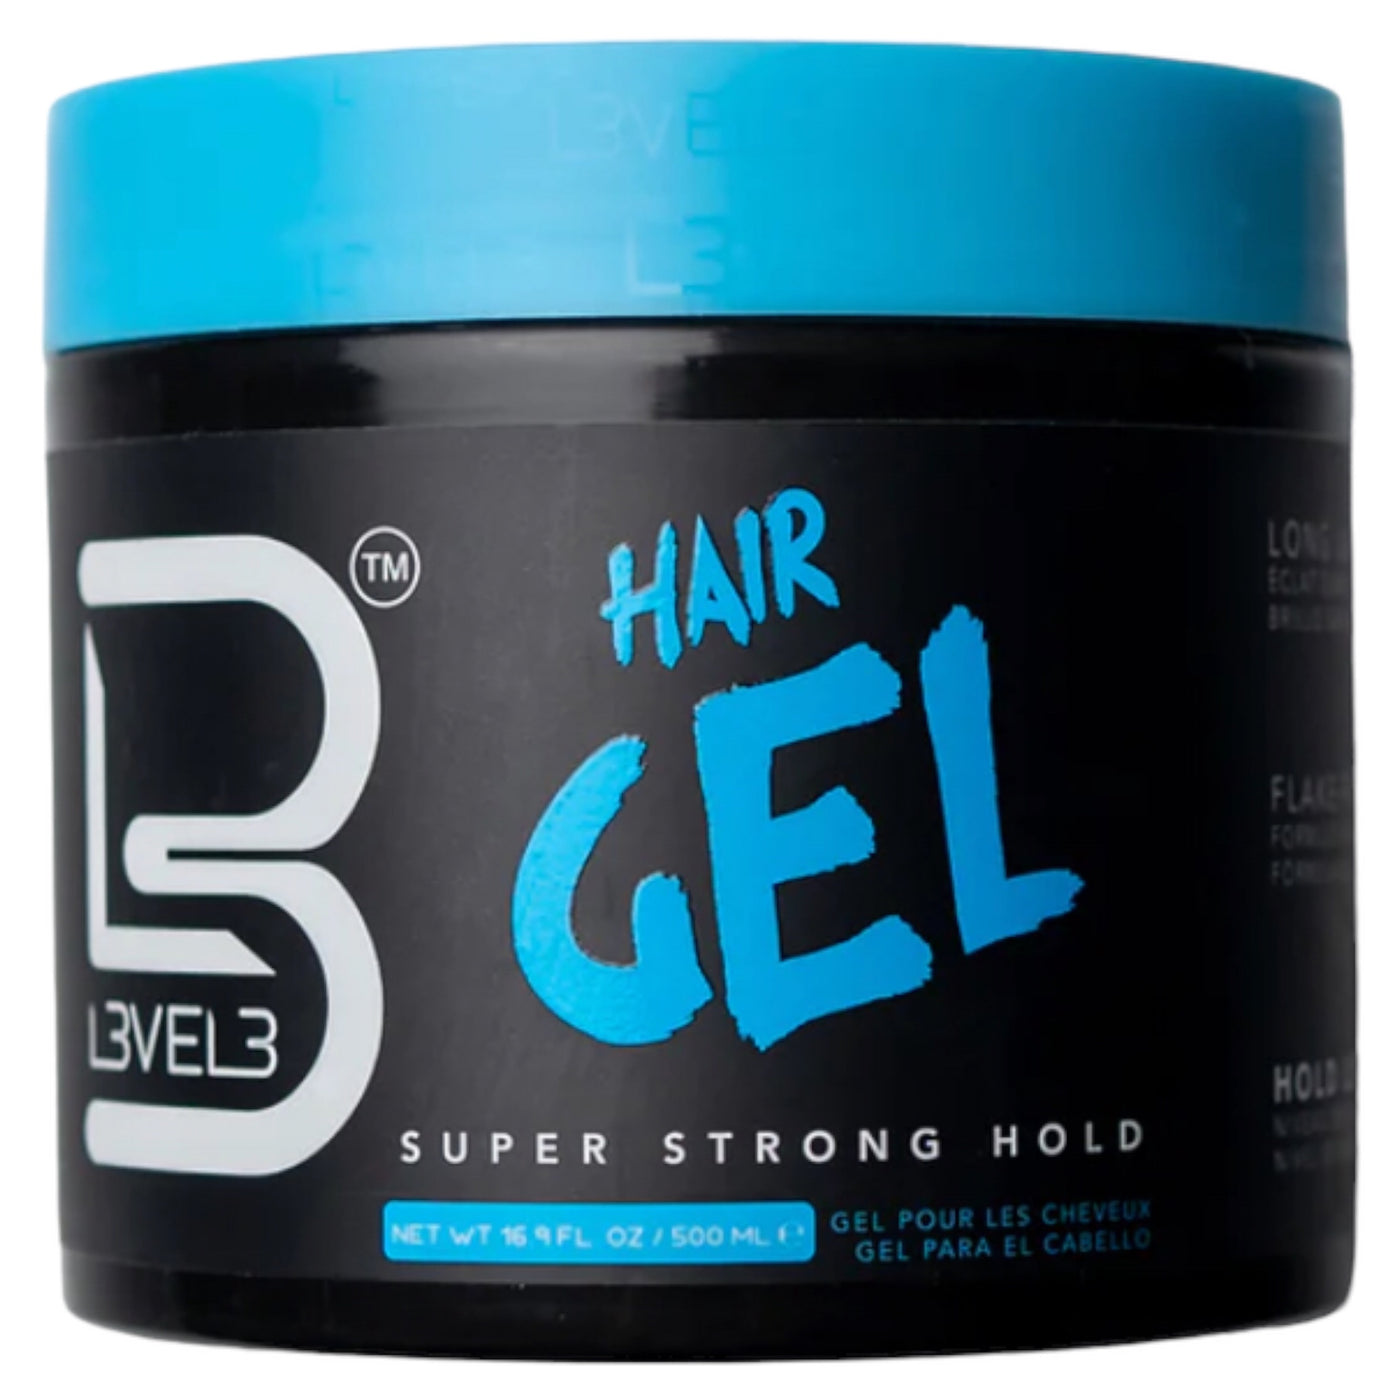 L3VEL3 Hair Styling Gel